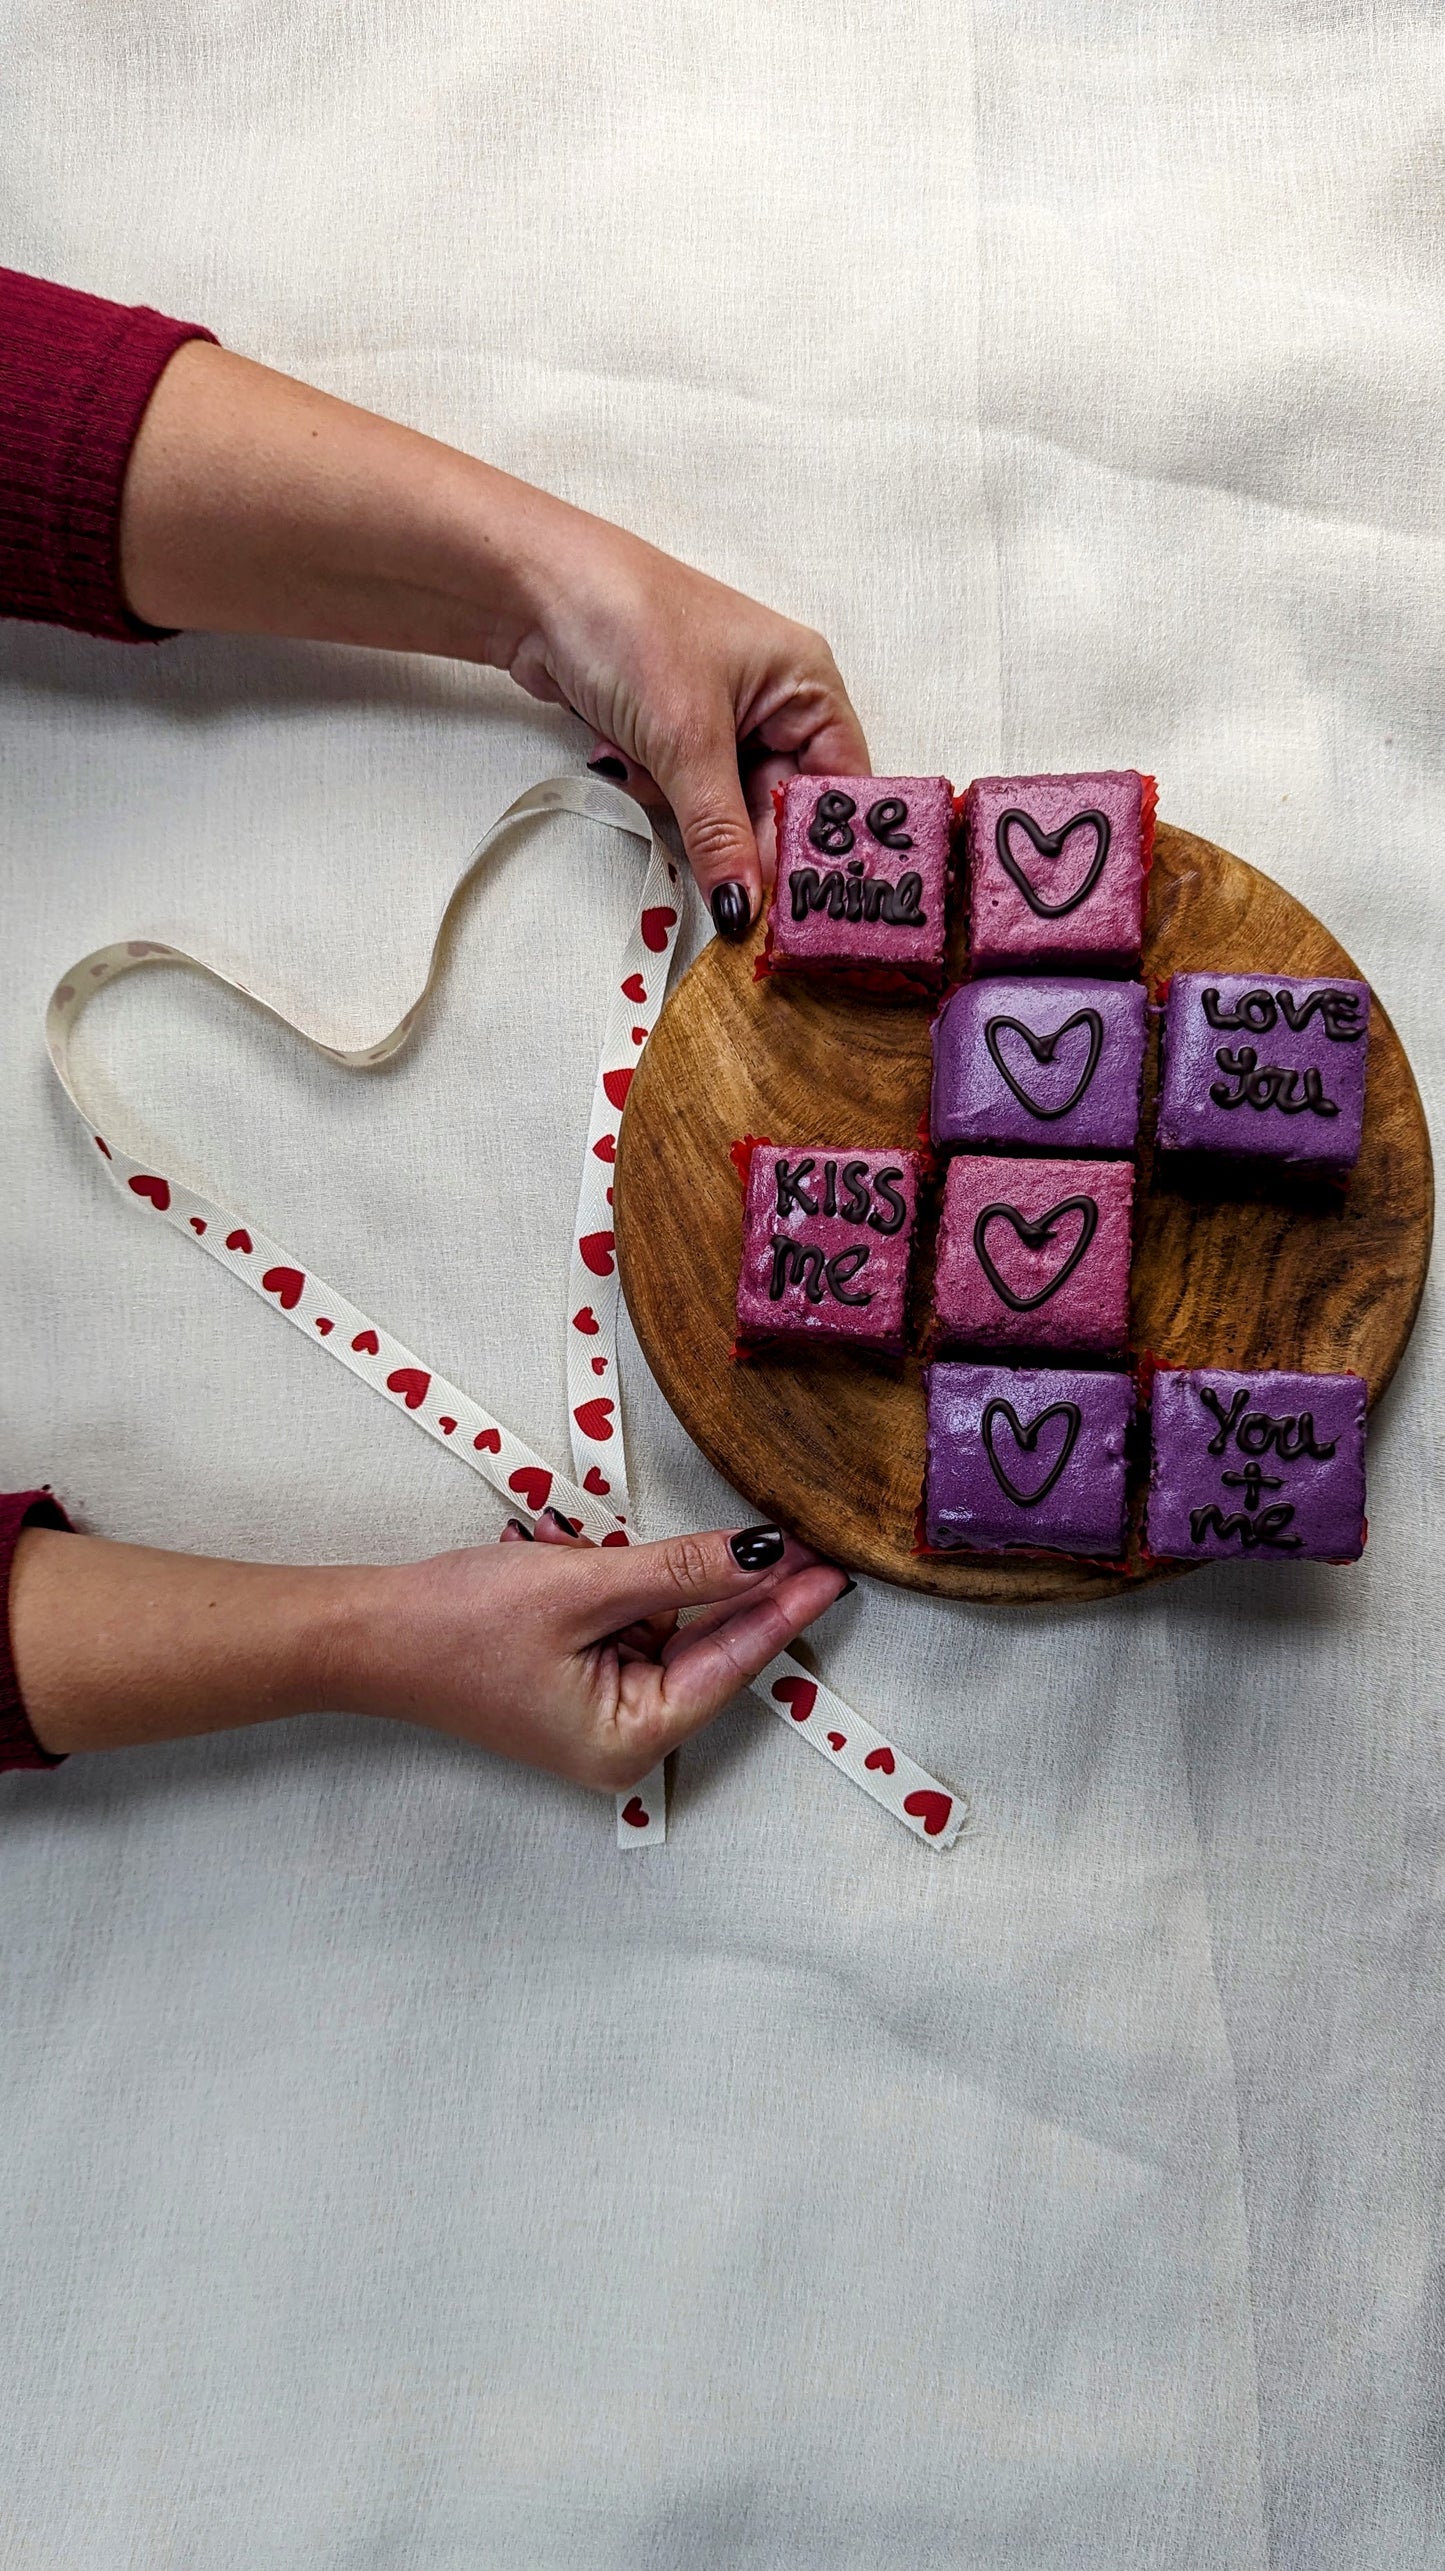 Vanilla Love Heart Cake Bites - Pack of 8